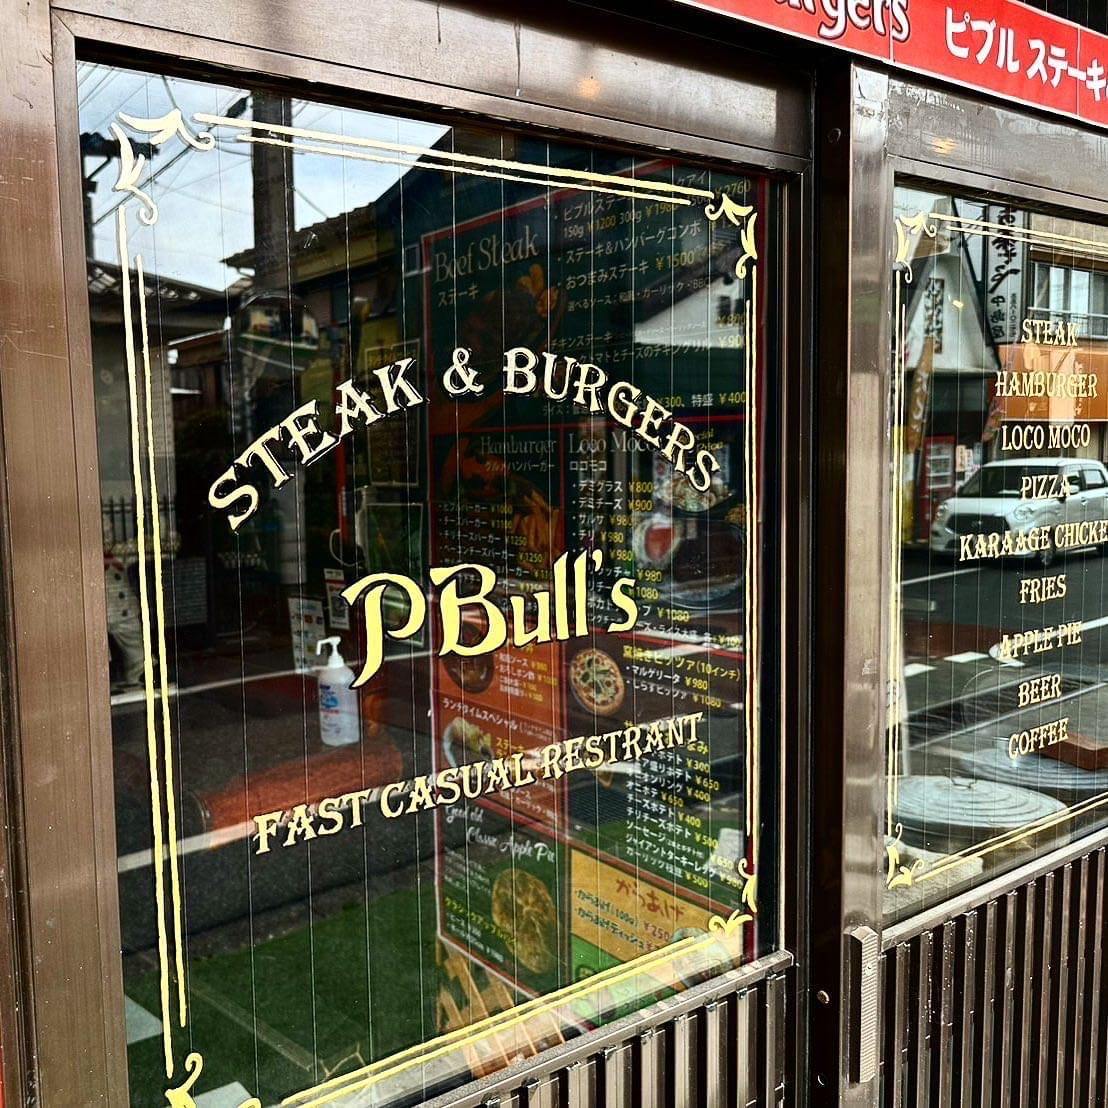 PBull Steak & Burgers(ピブルステーキアンドバーガーズ) image